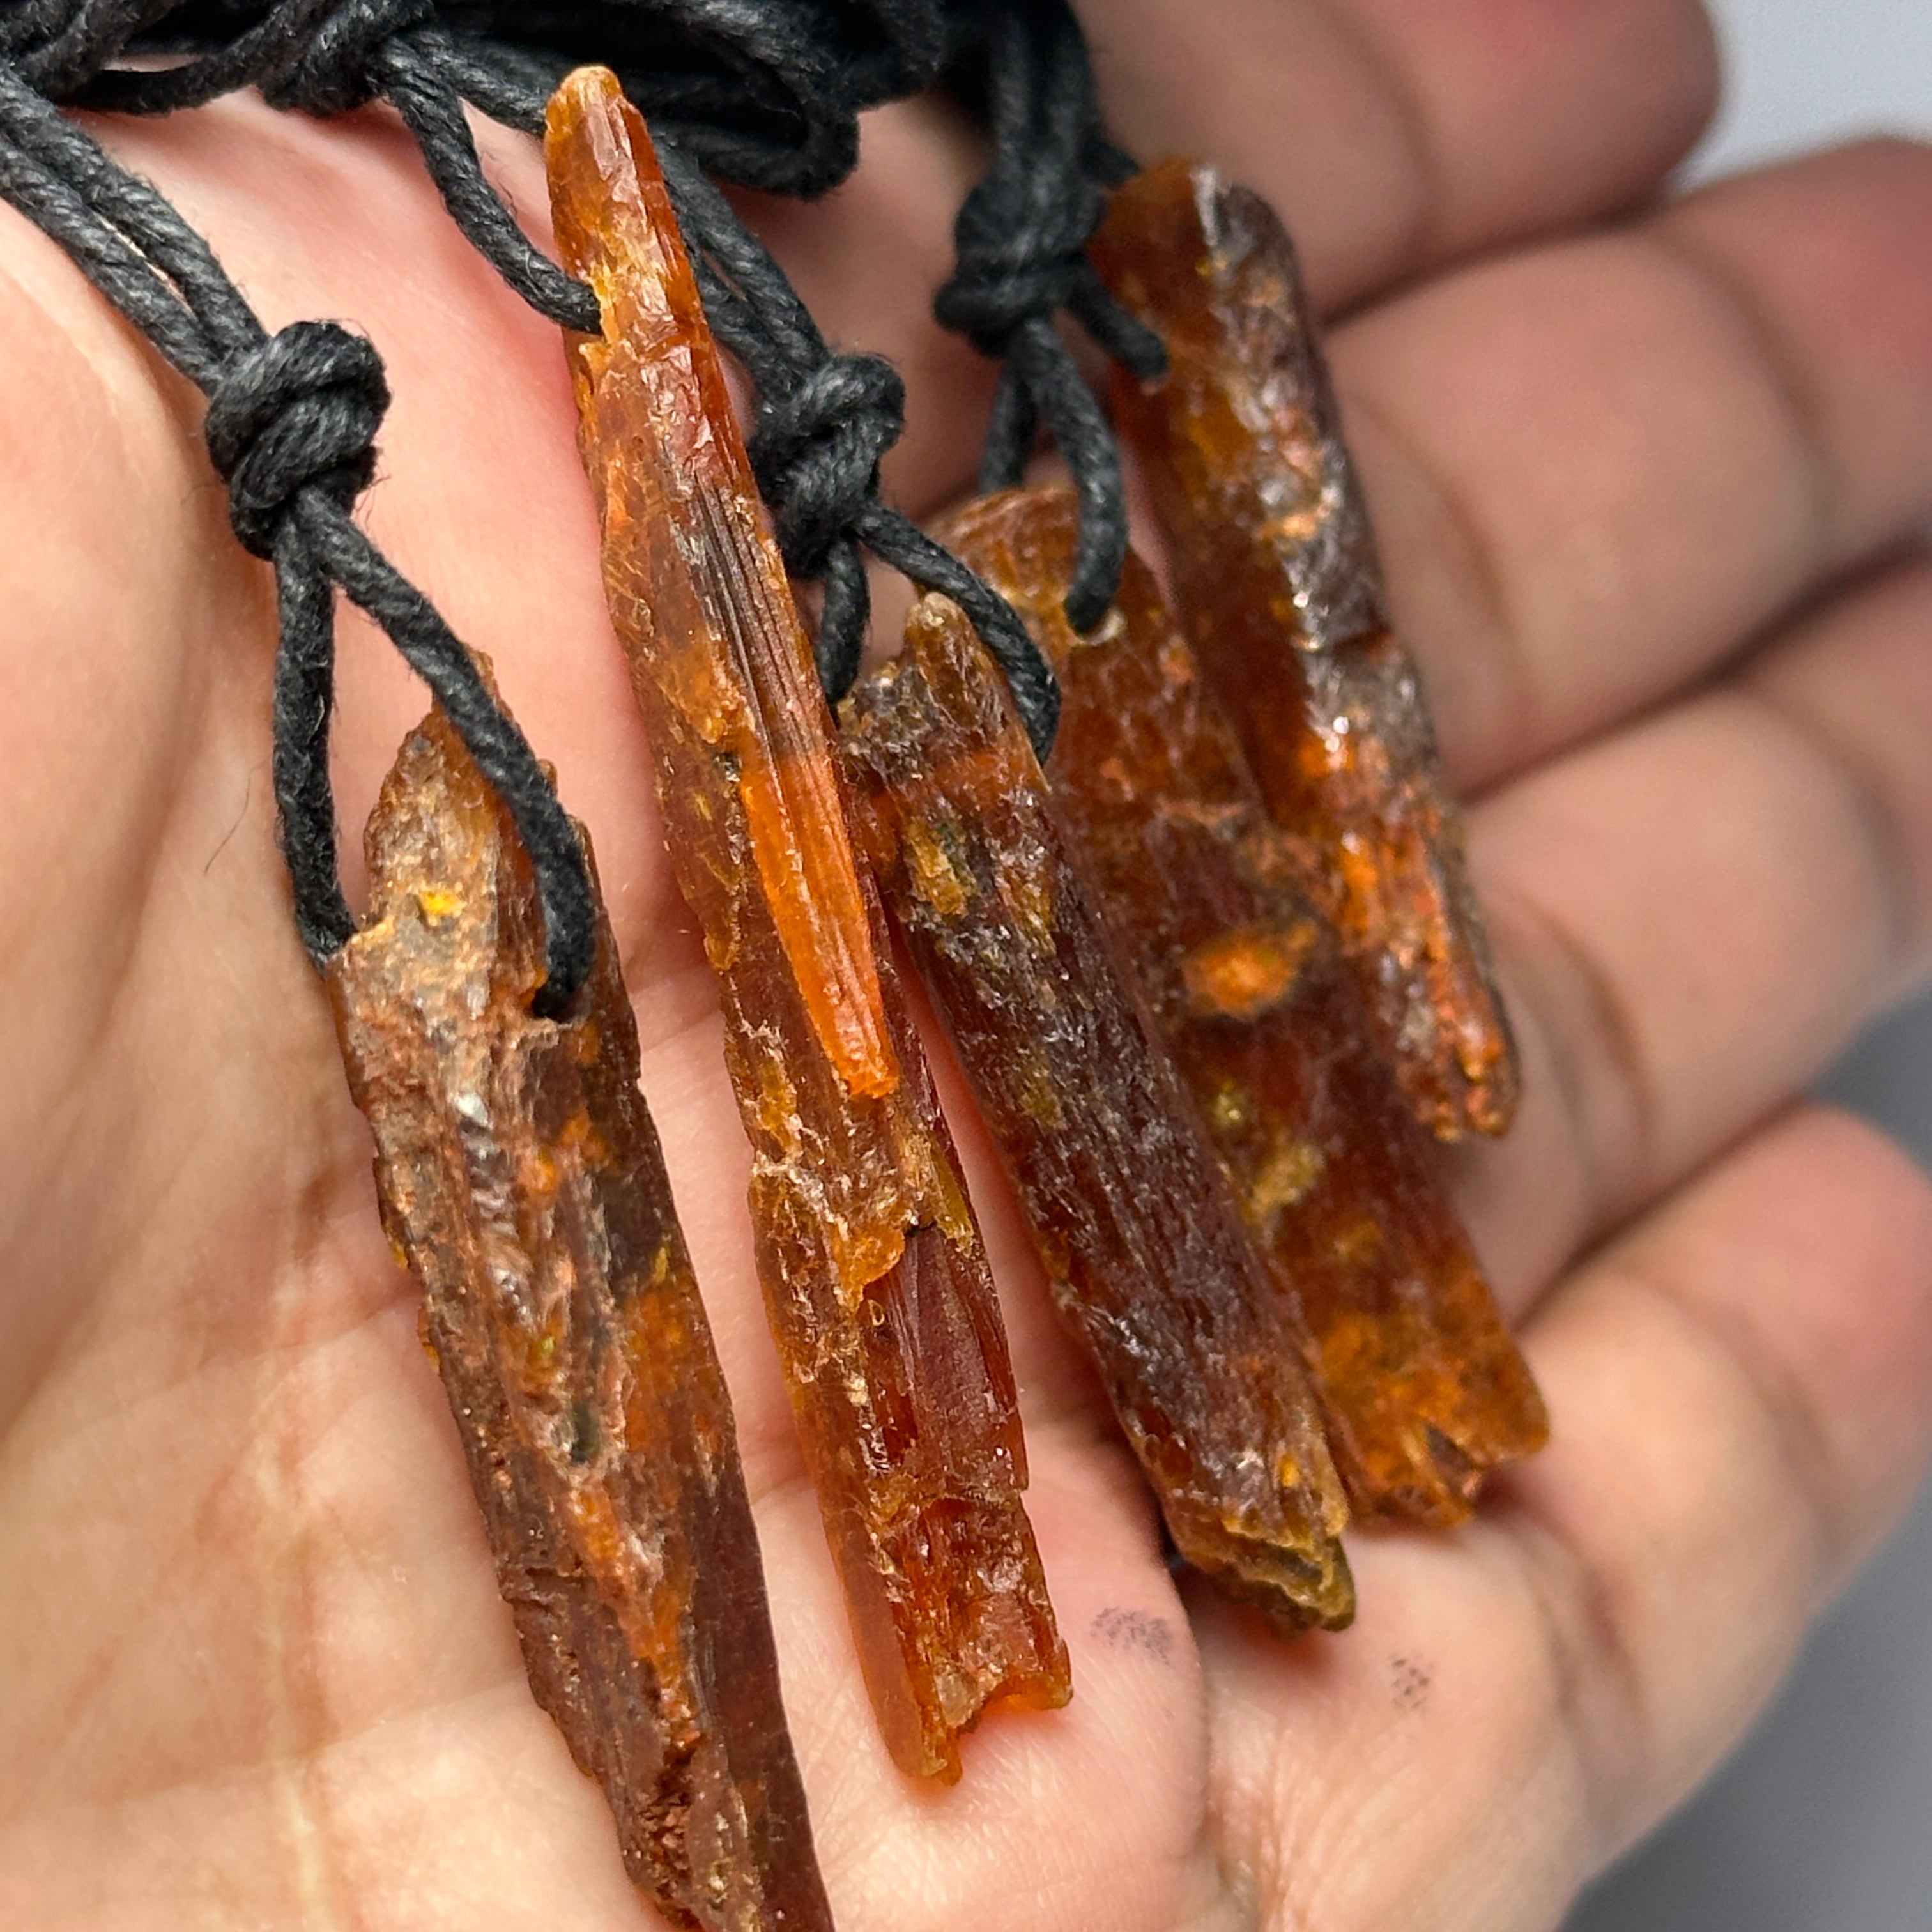 5 pcs Tanzanian Orange Kyanite Crystal pendants lot. Price is for all 5